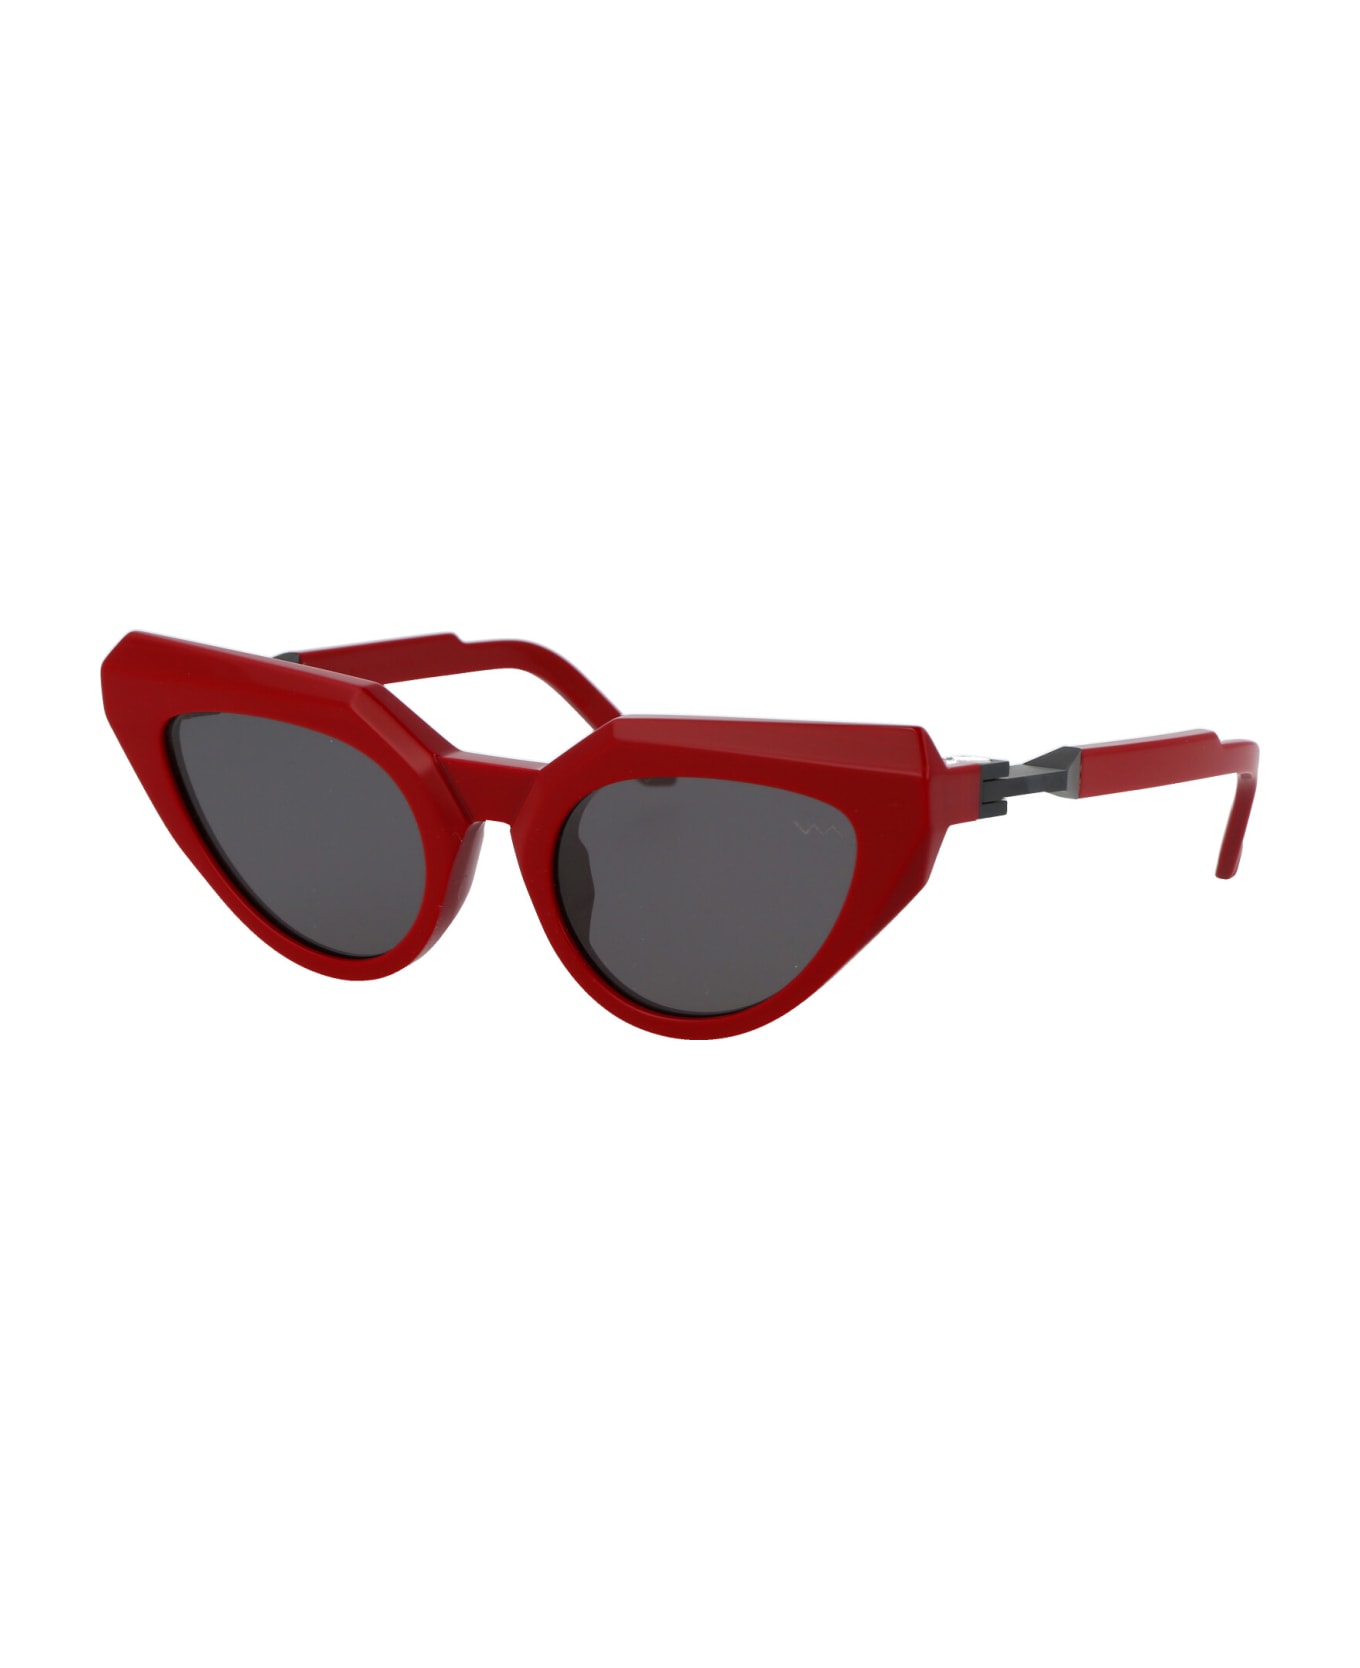 VAVA Bl0028 Sunglasses - RED|BLACK FLEX HINGES|BLACK LENSES サングラス